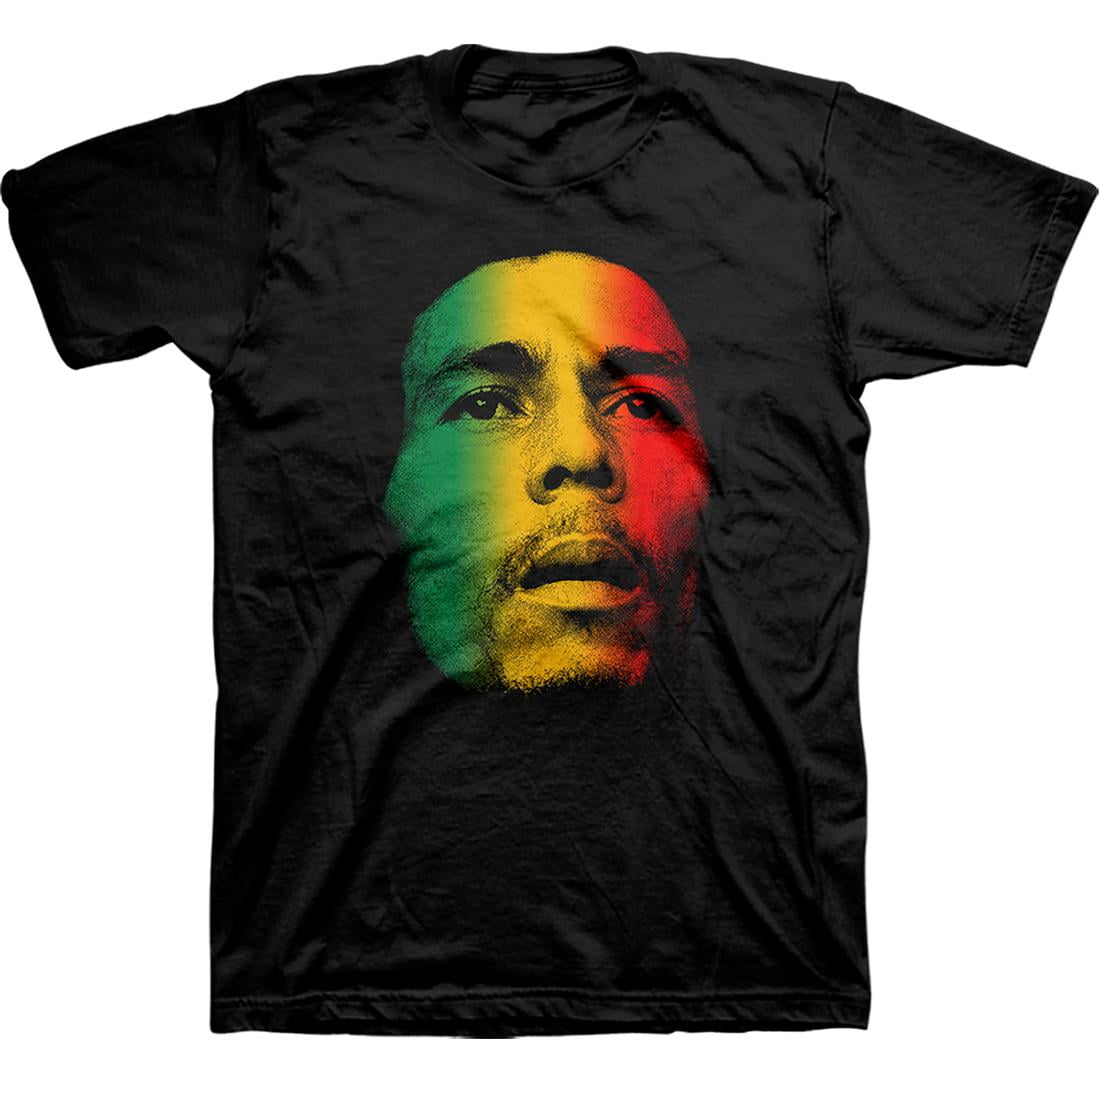 Bob Marley Black & White Mens T Shirt Unisex Tee Official Licensed Band Merch 